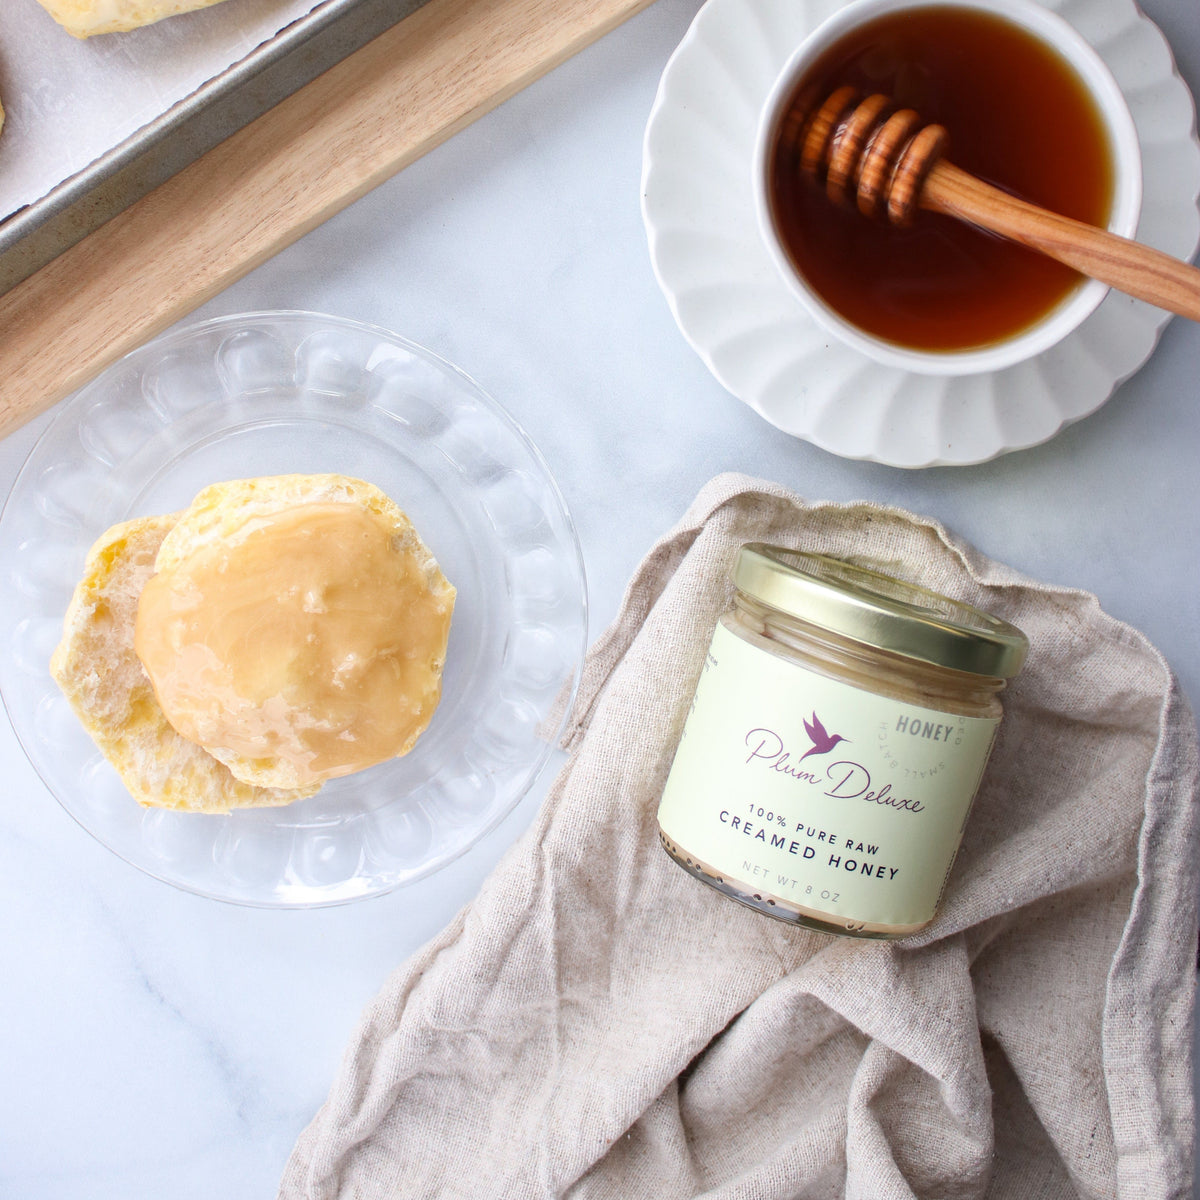 Raw Creamed Honey by Plum Deluxe Tea